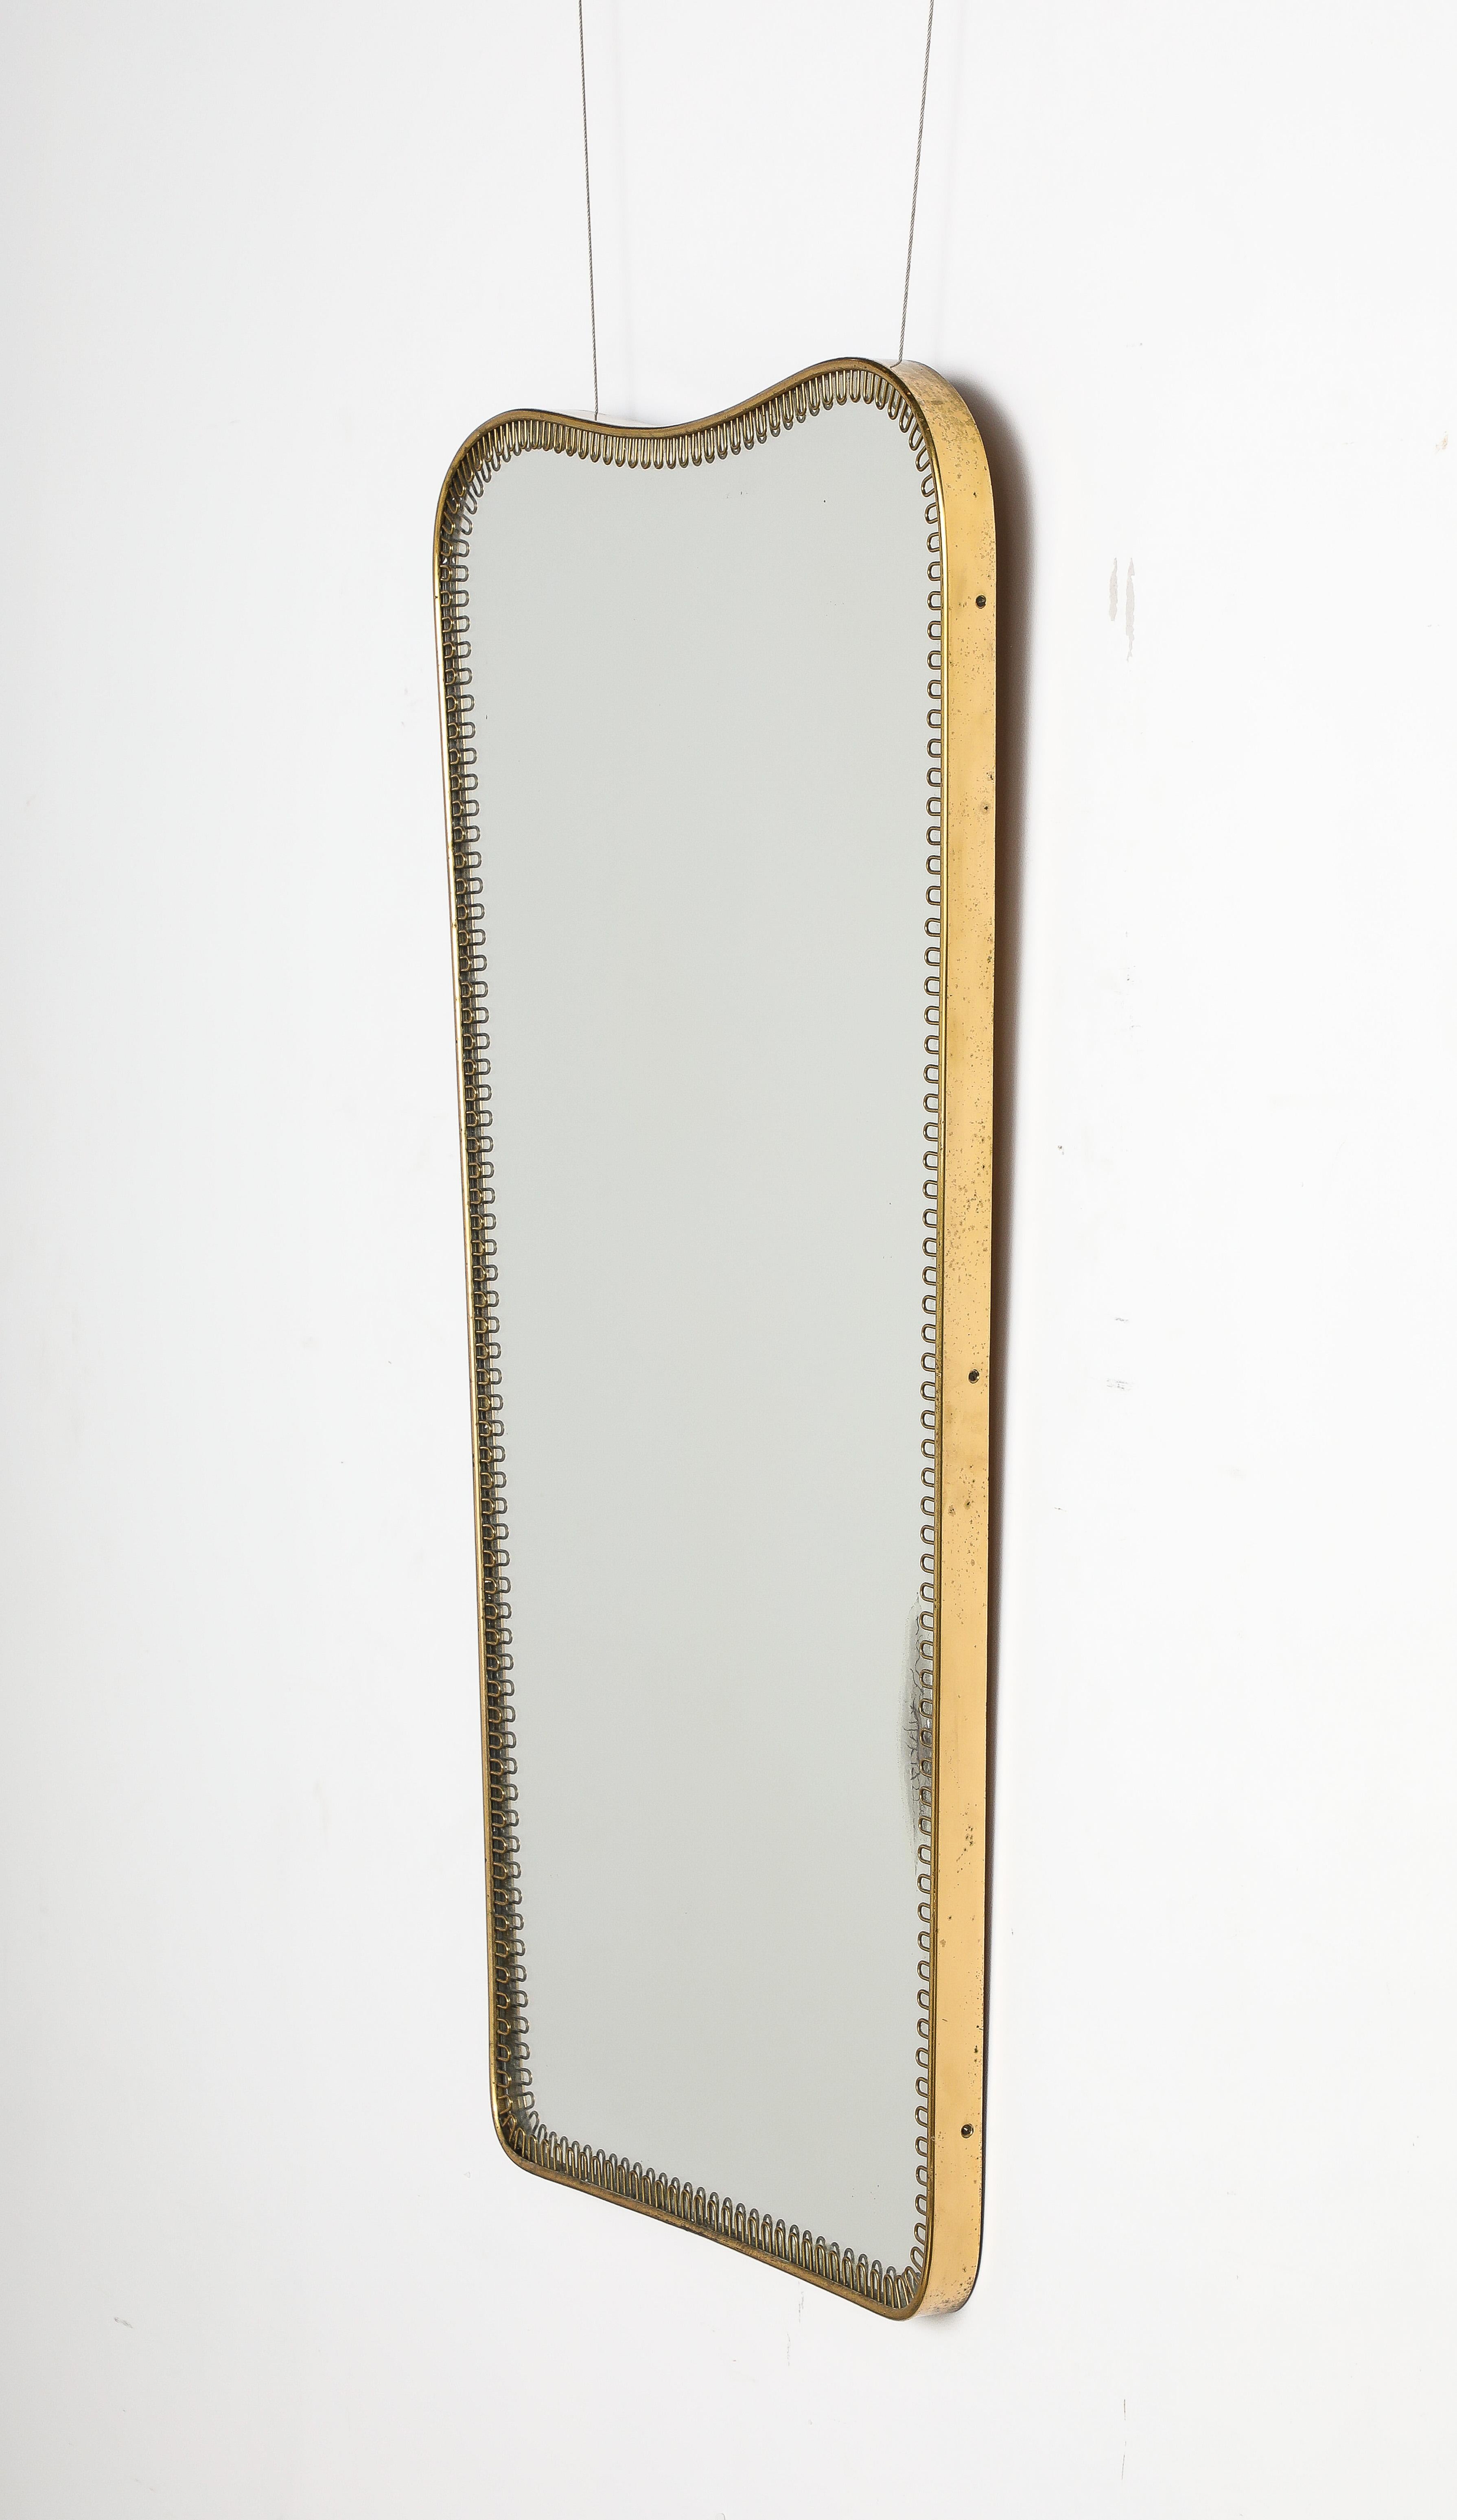 European Gio Ponti Attributed Italian Modernist Brass Framed Mirror, Italy, circa 1940 For Sale